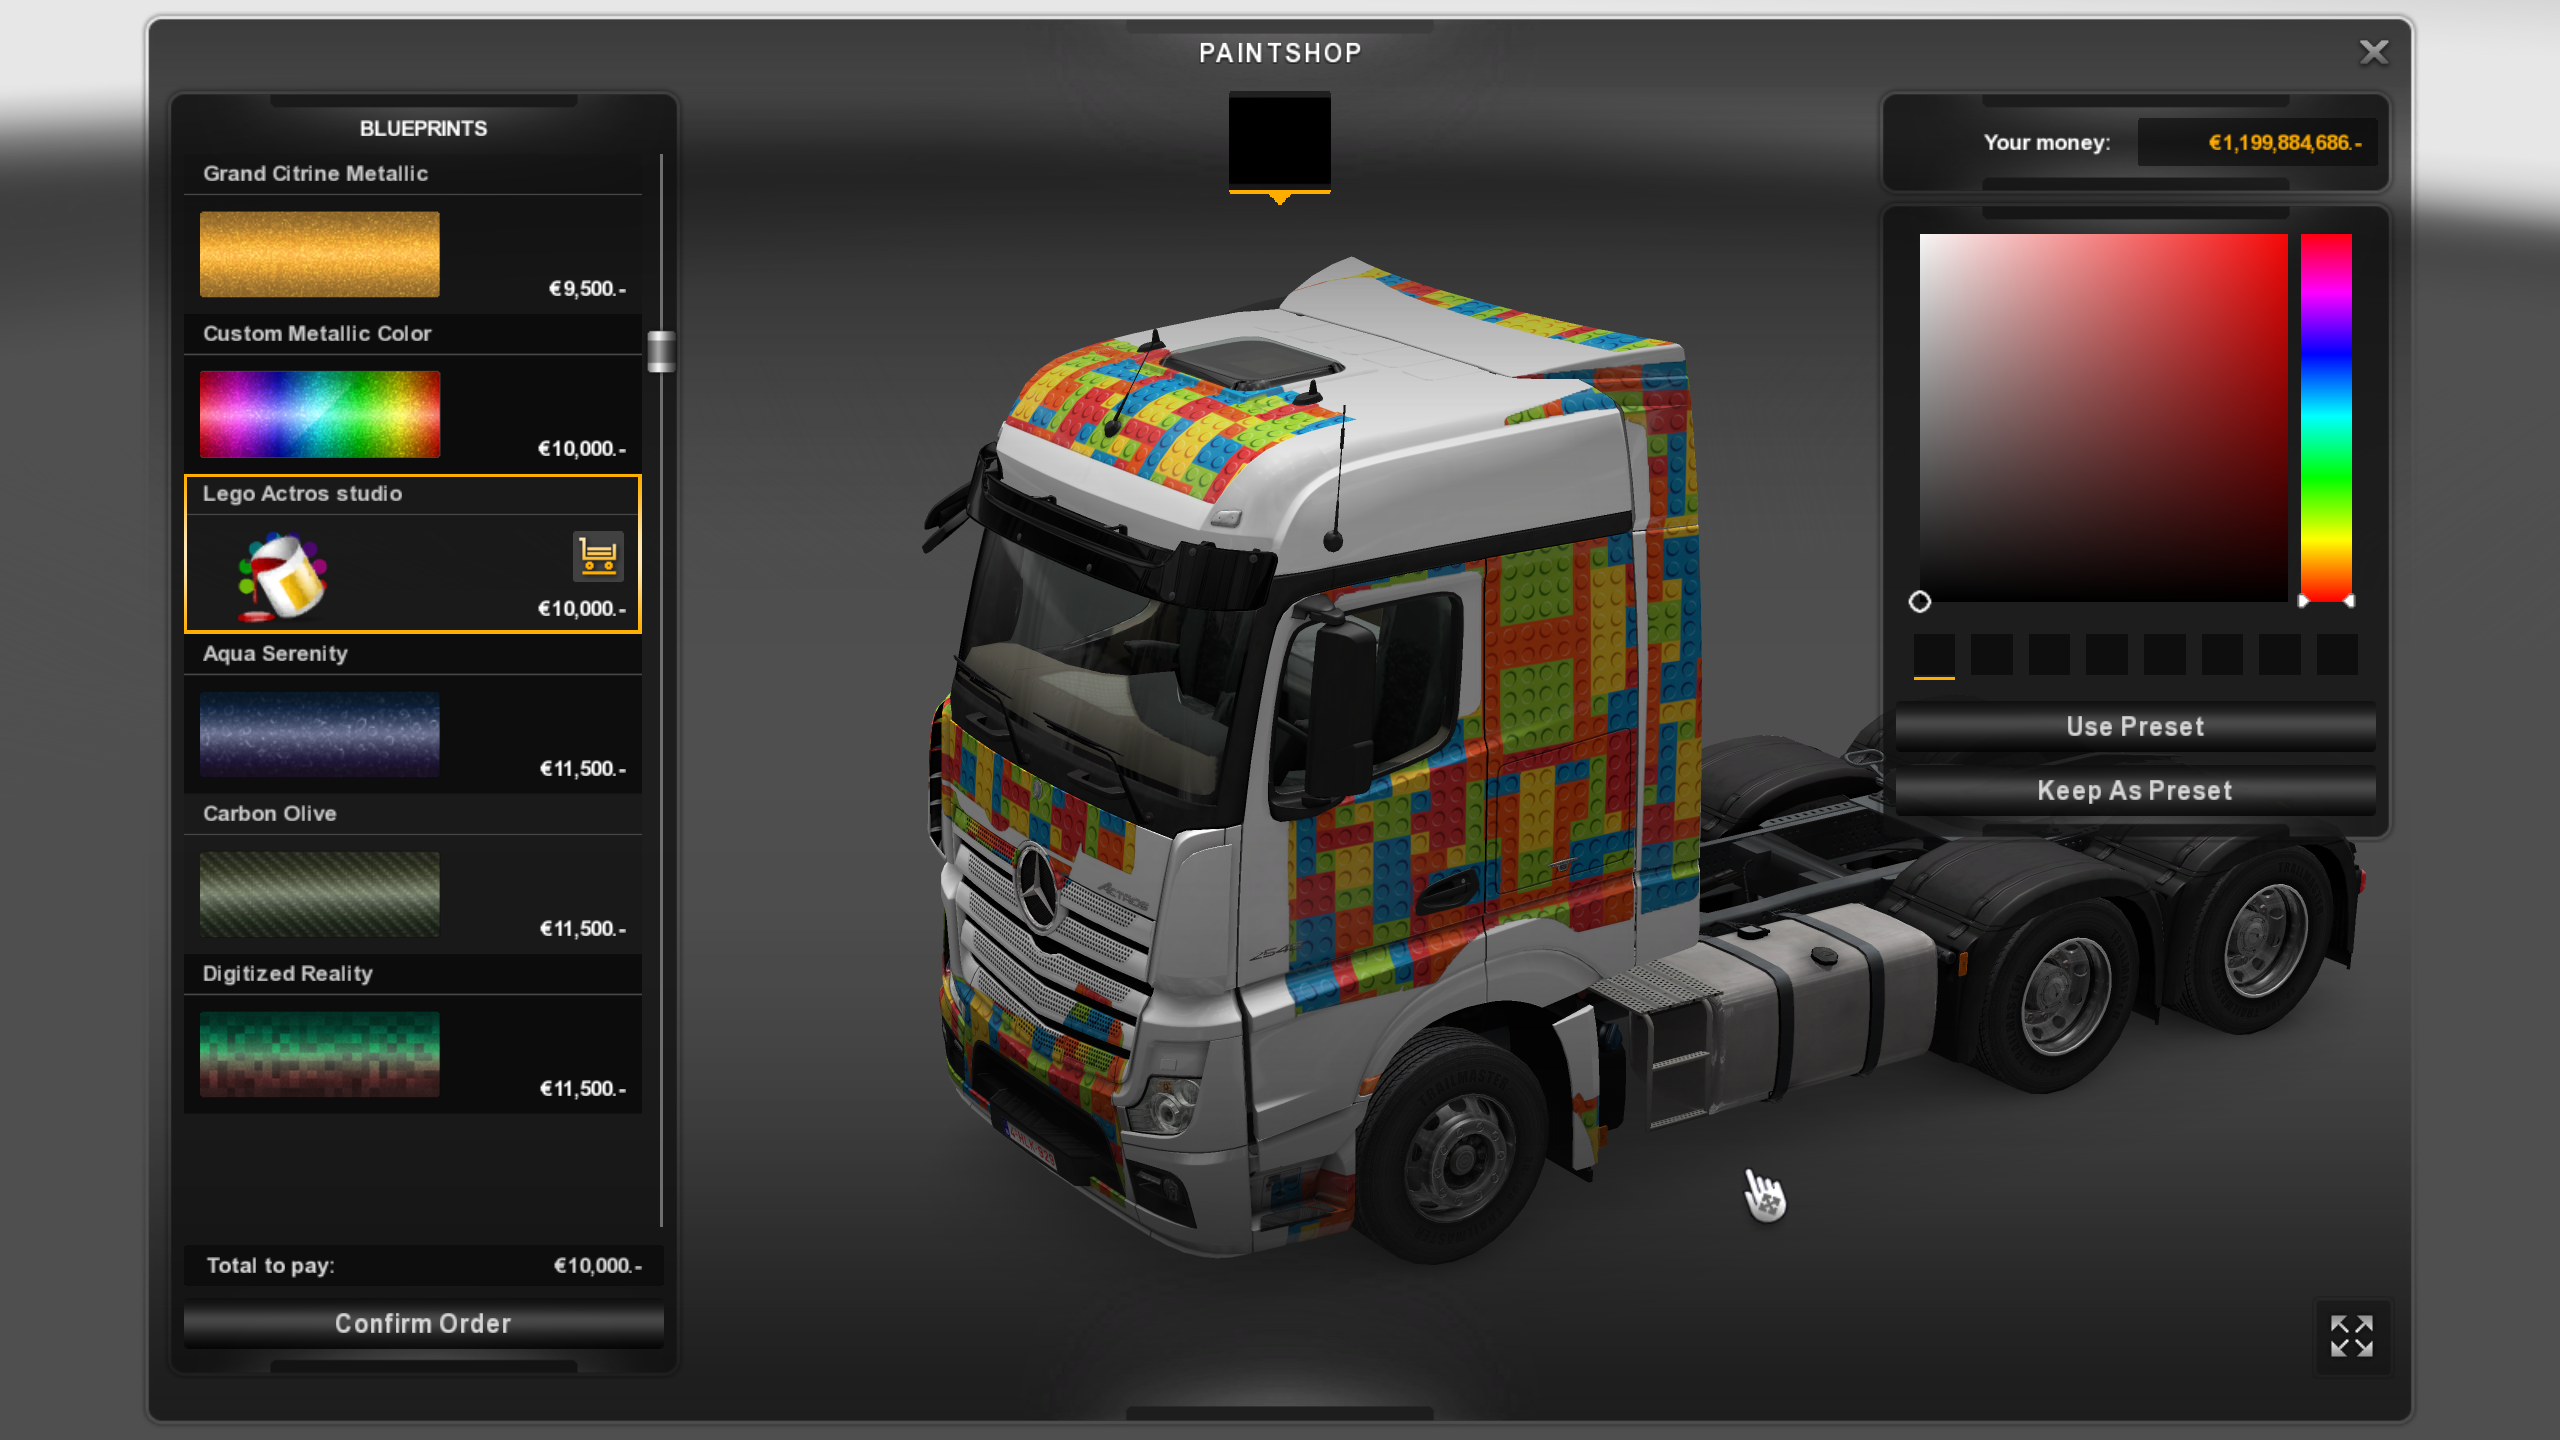 Euro truck simulator 2. три способа заработать, стоя на месте » steamdb.ru